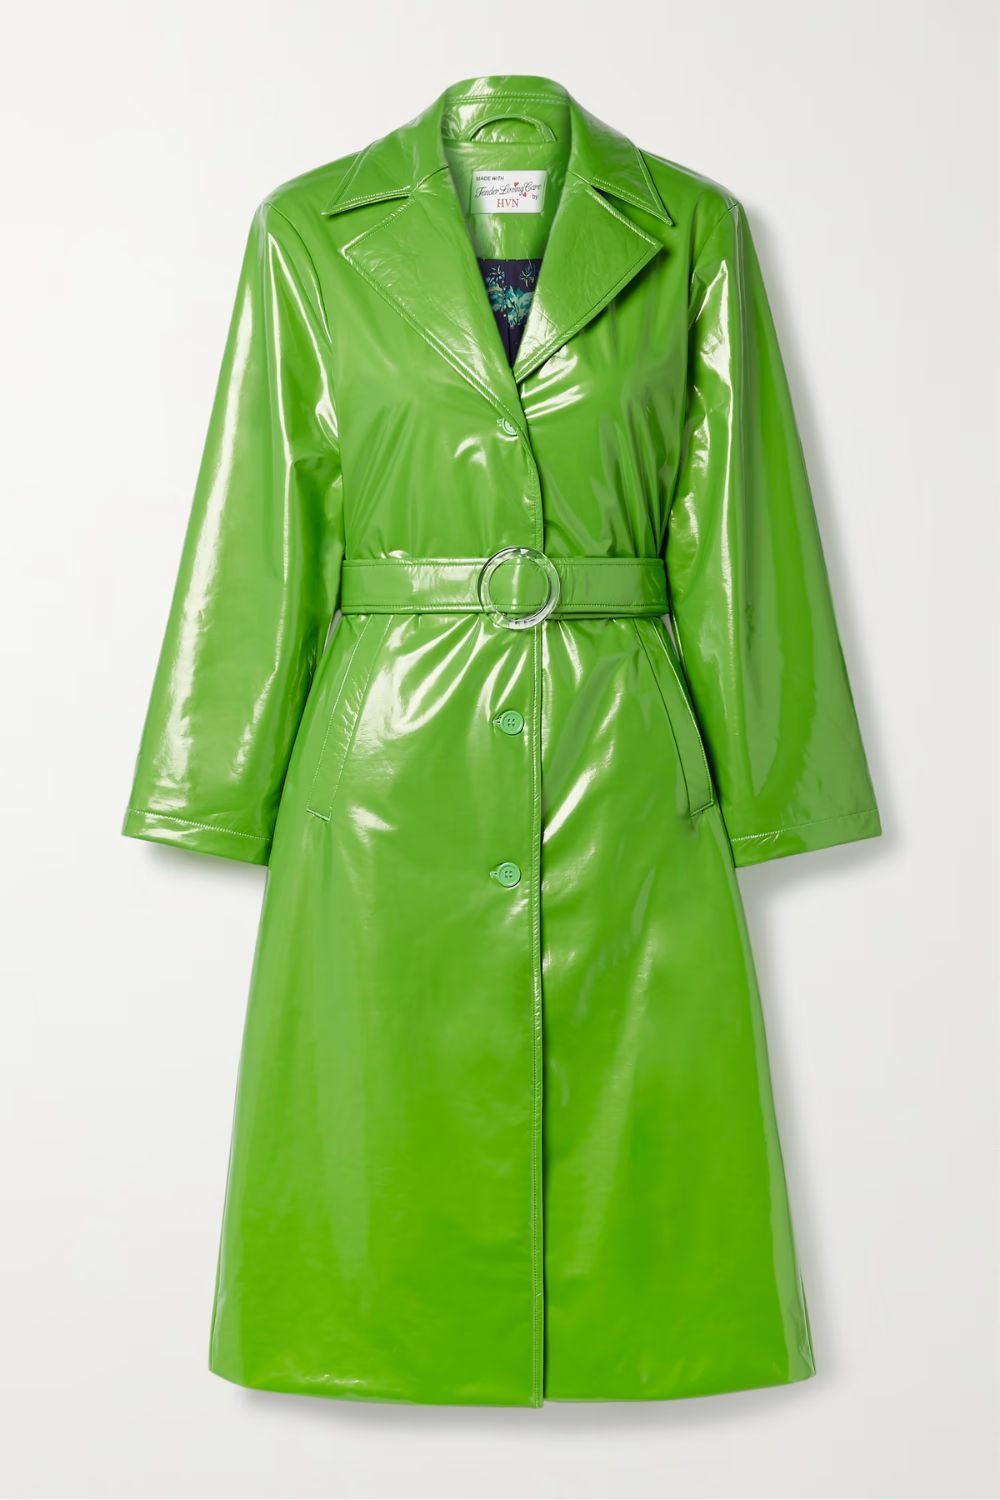 bright-green-pvc-trench-coat